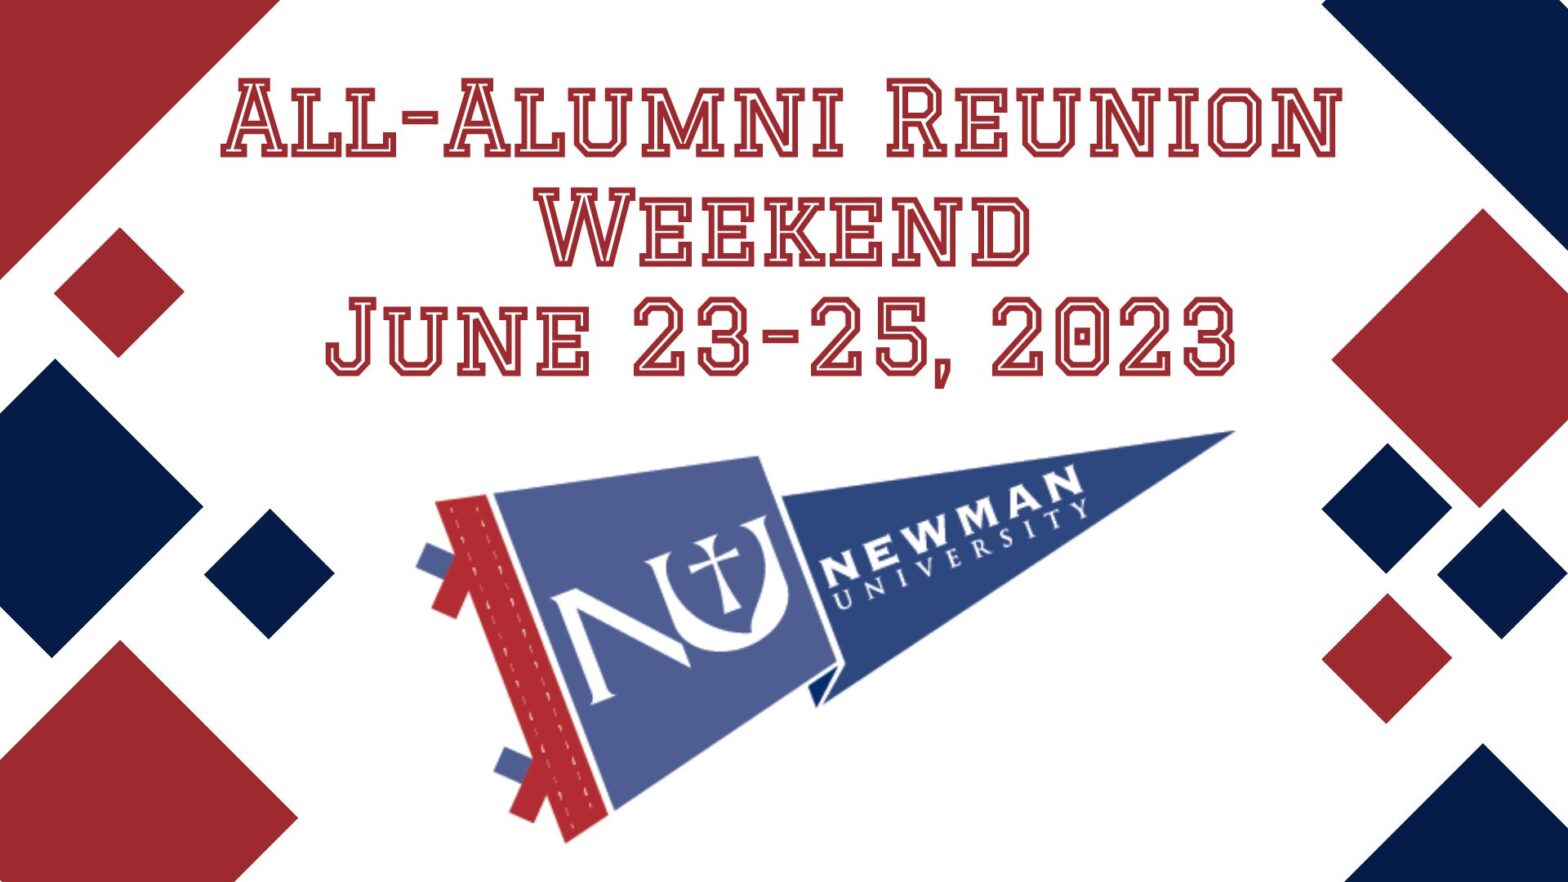 All-Alumni Reunion